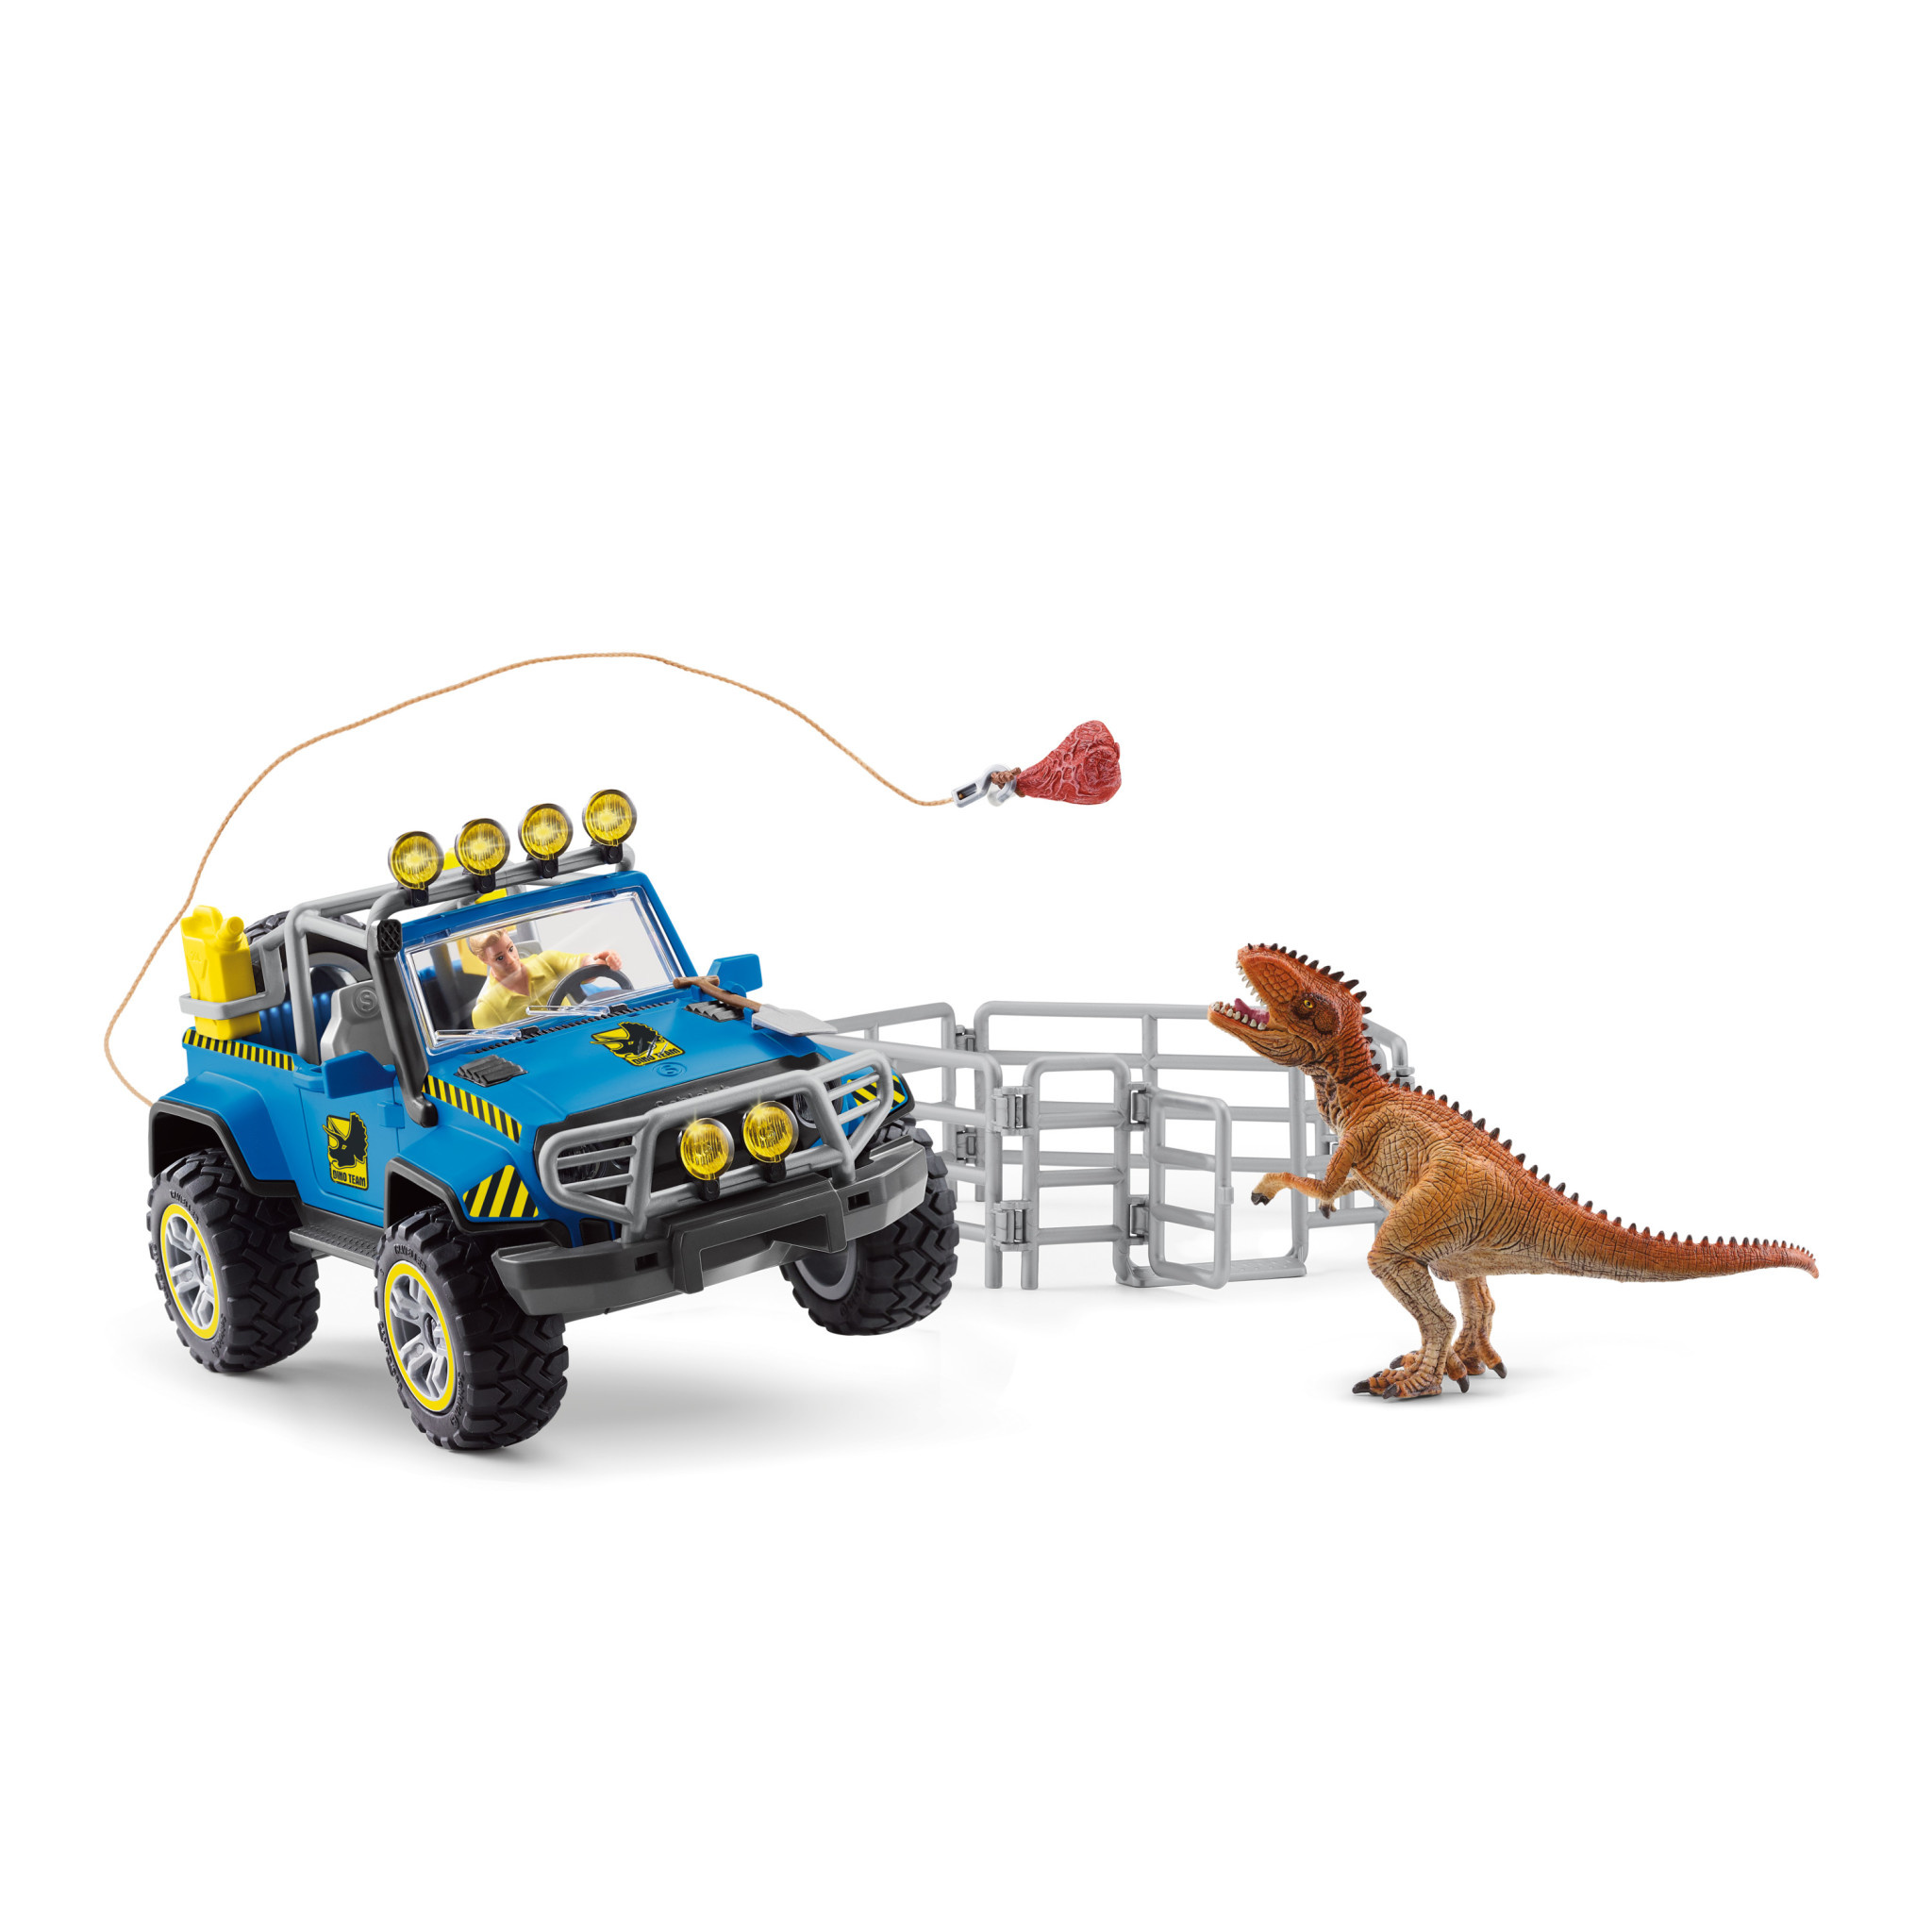 Vehicle with Dinosaur